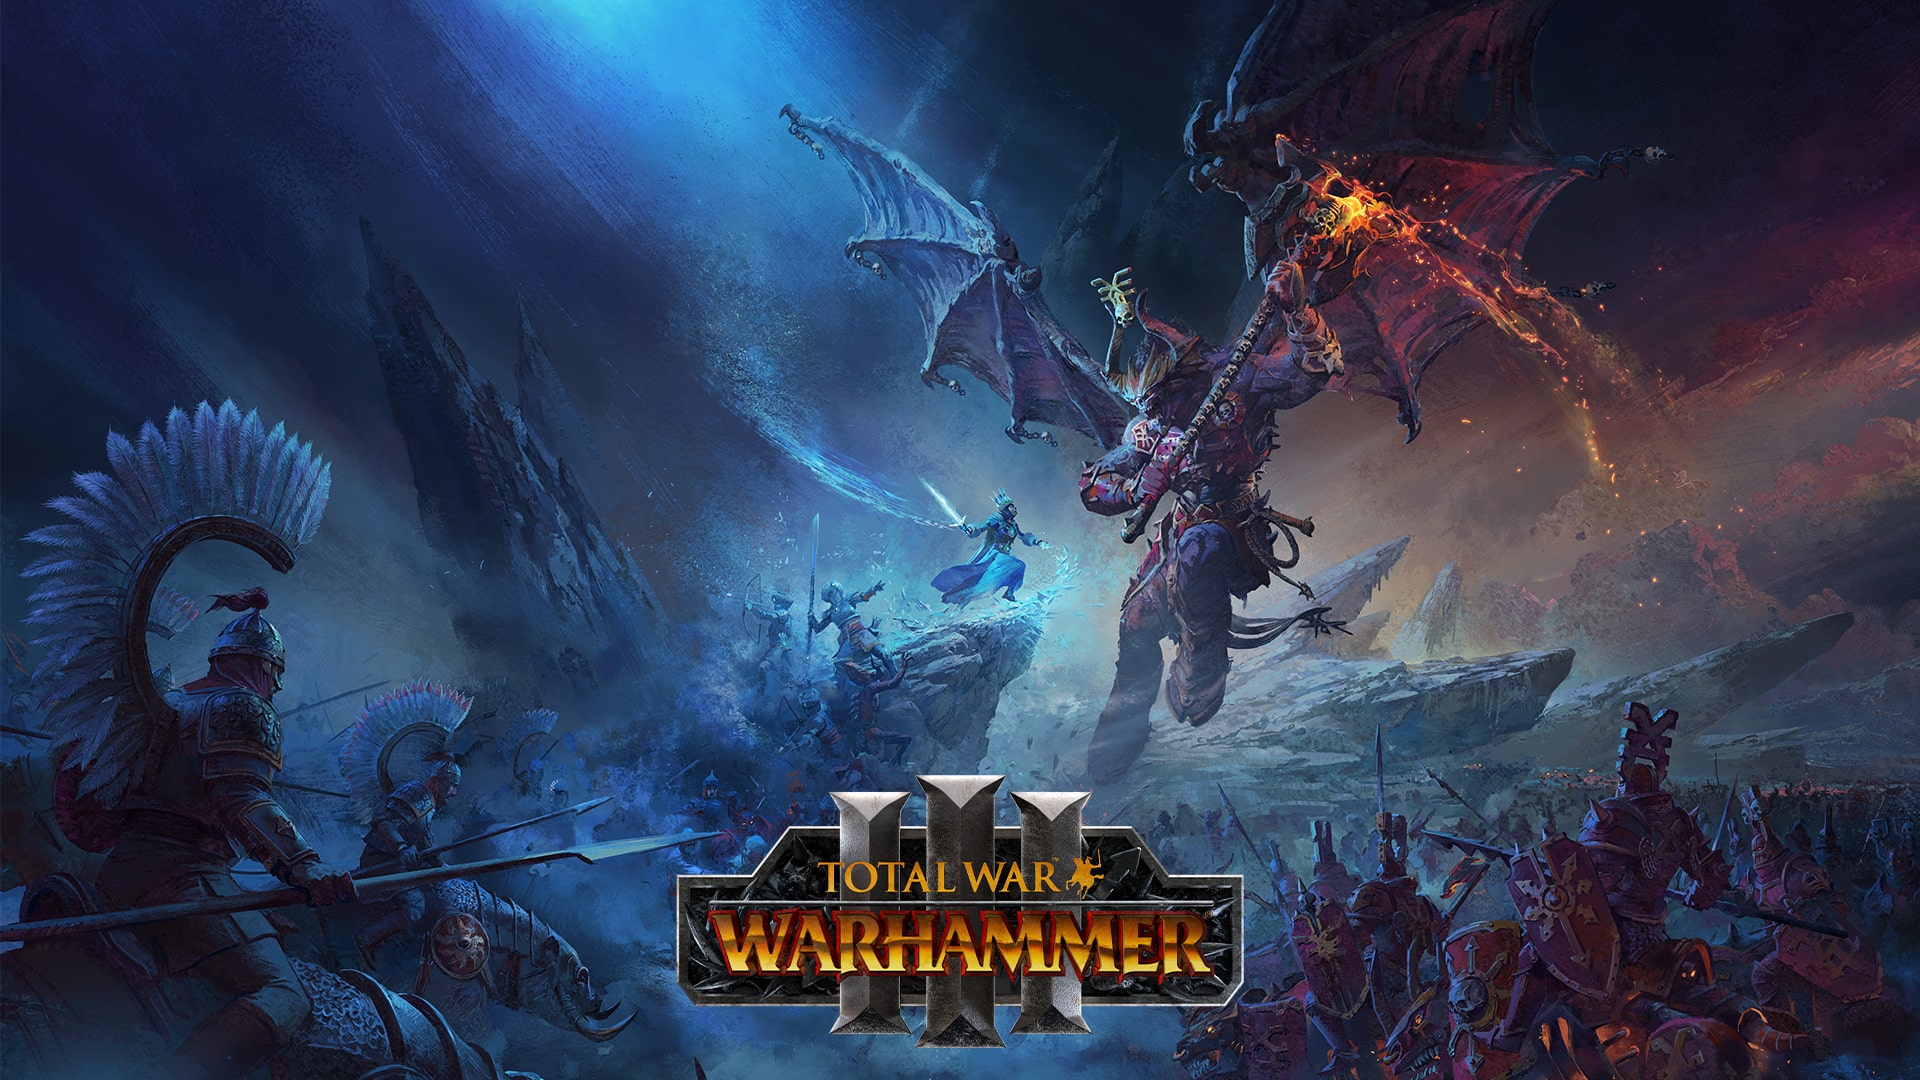 In-game screenshot of Total War: Warhammer III showcasing an epic battlefield